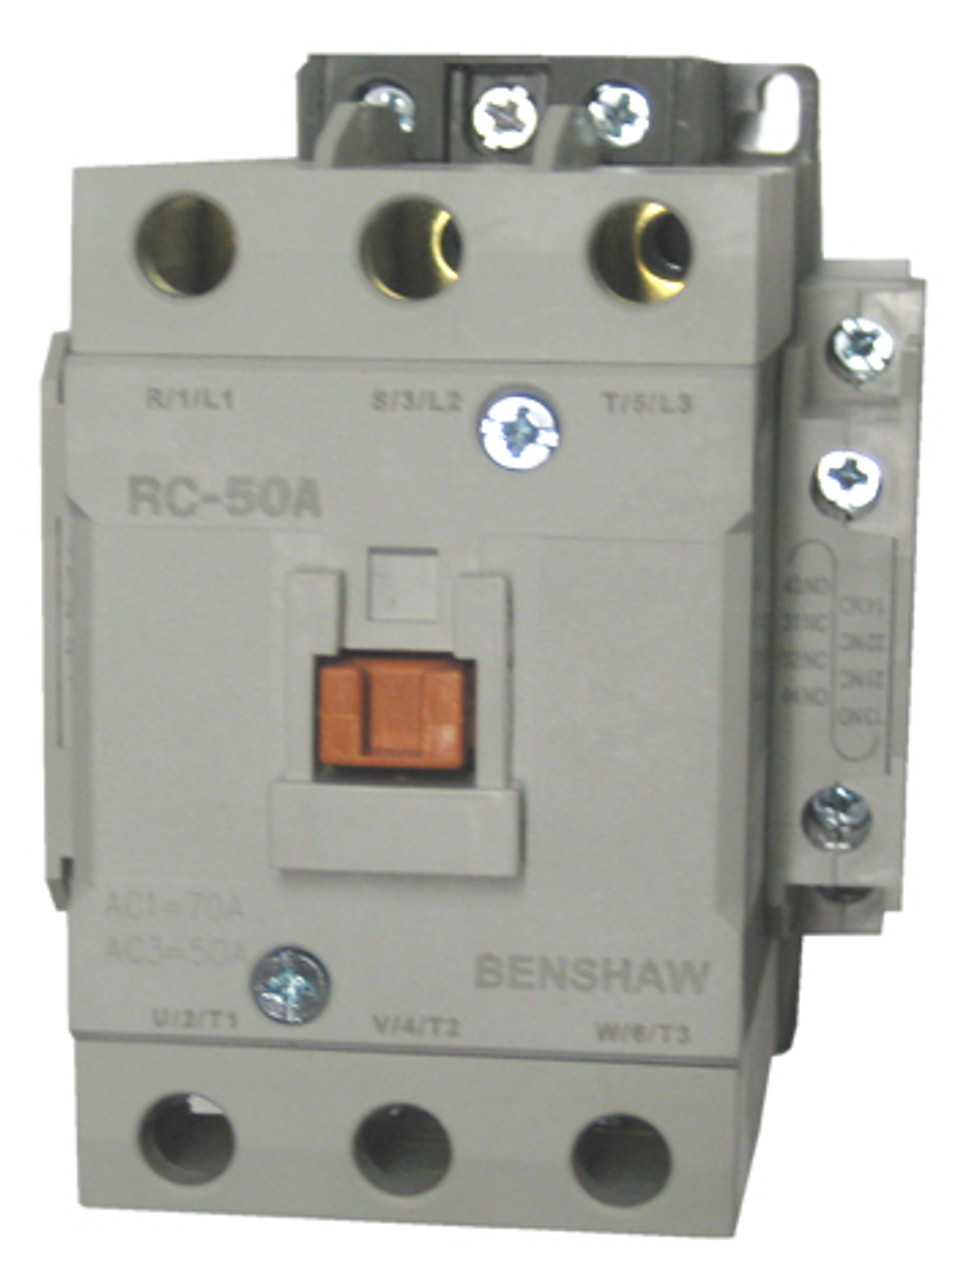 Benshaw RC-50A-56AC24 contactor